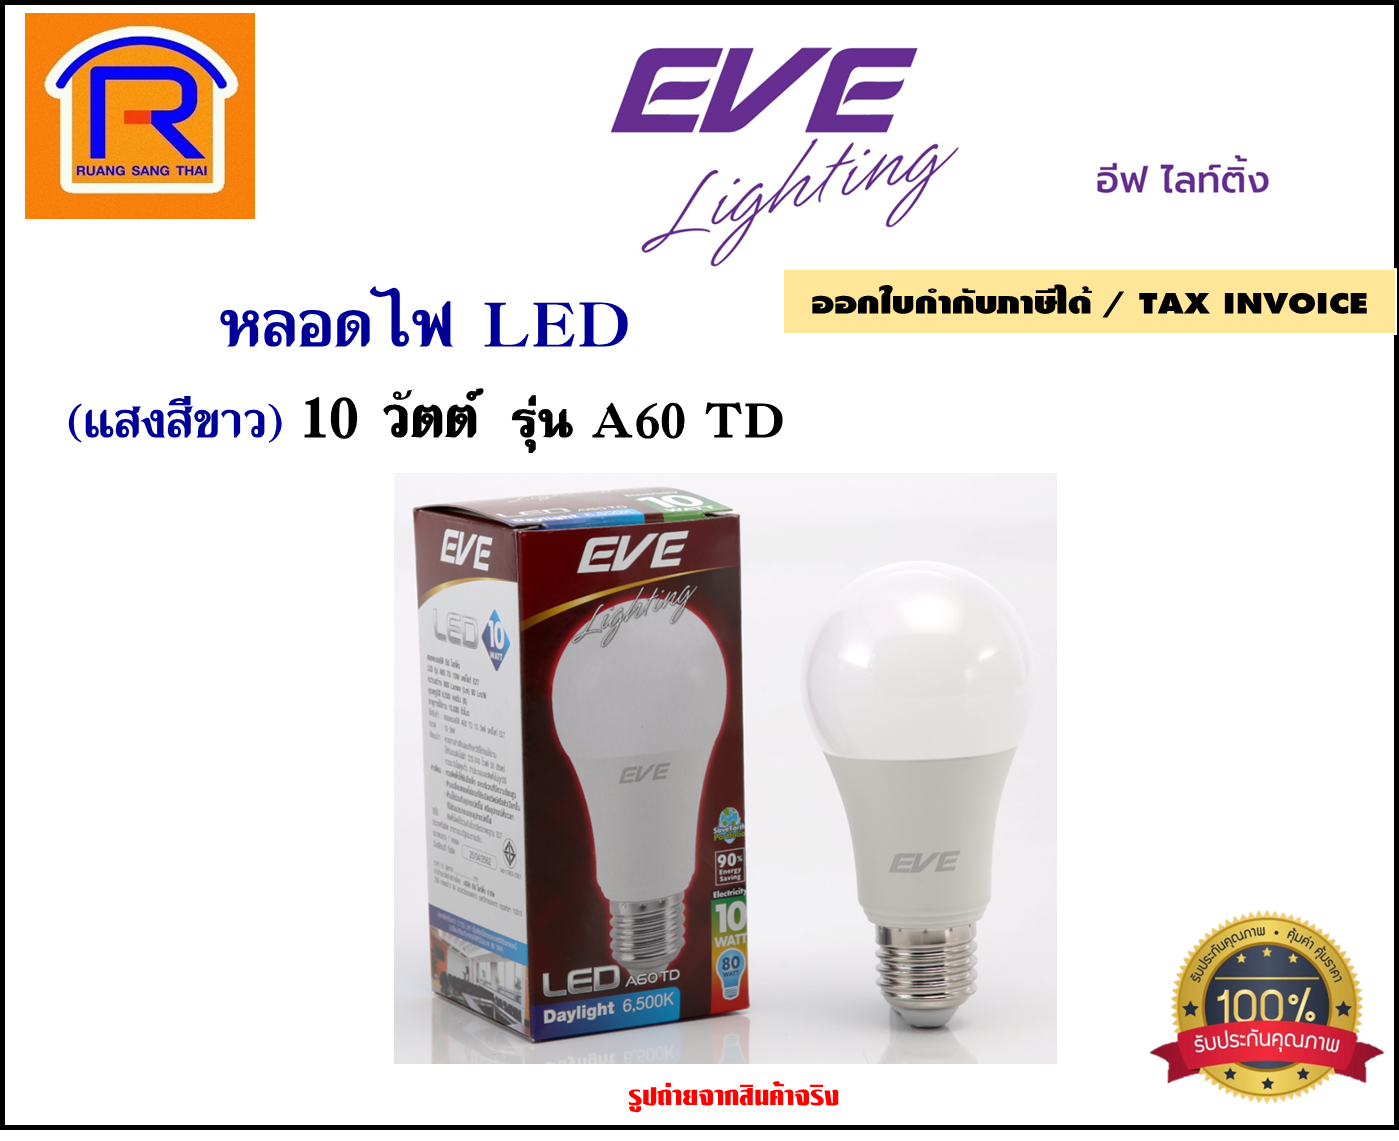 EVE lighting หลอดไฟ LED A60